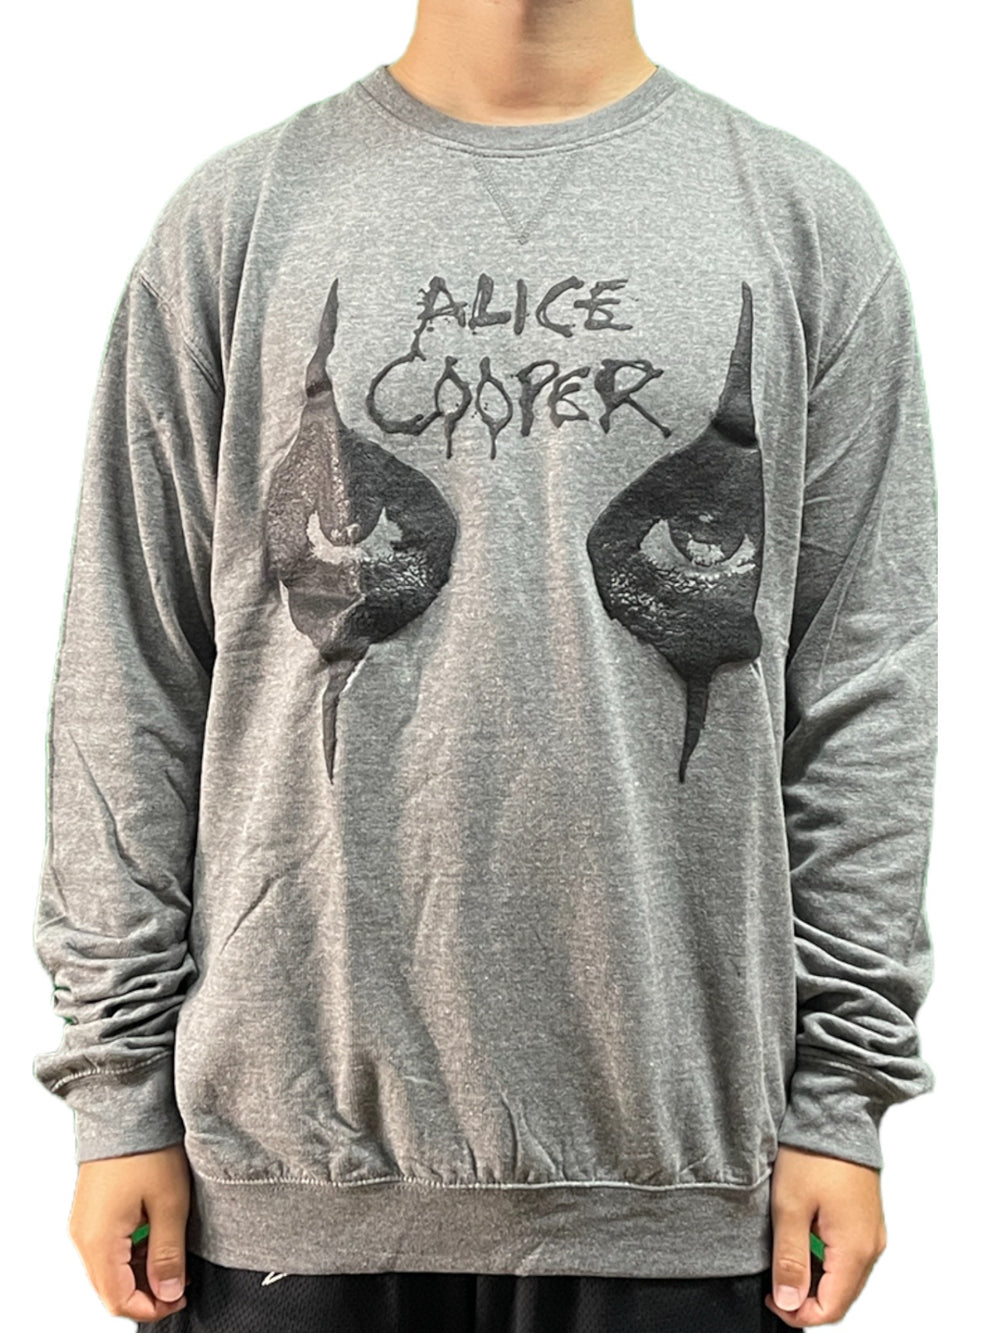 Alice Cooper Eyes Puff Print Fleece Sweater Long Sleeved Brand New